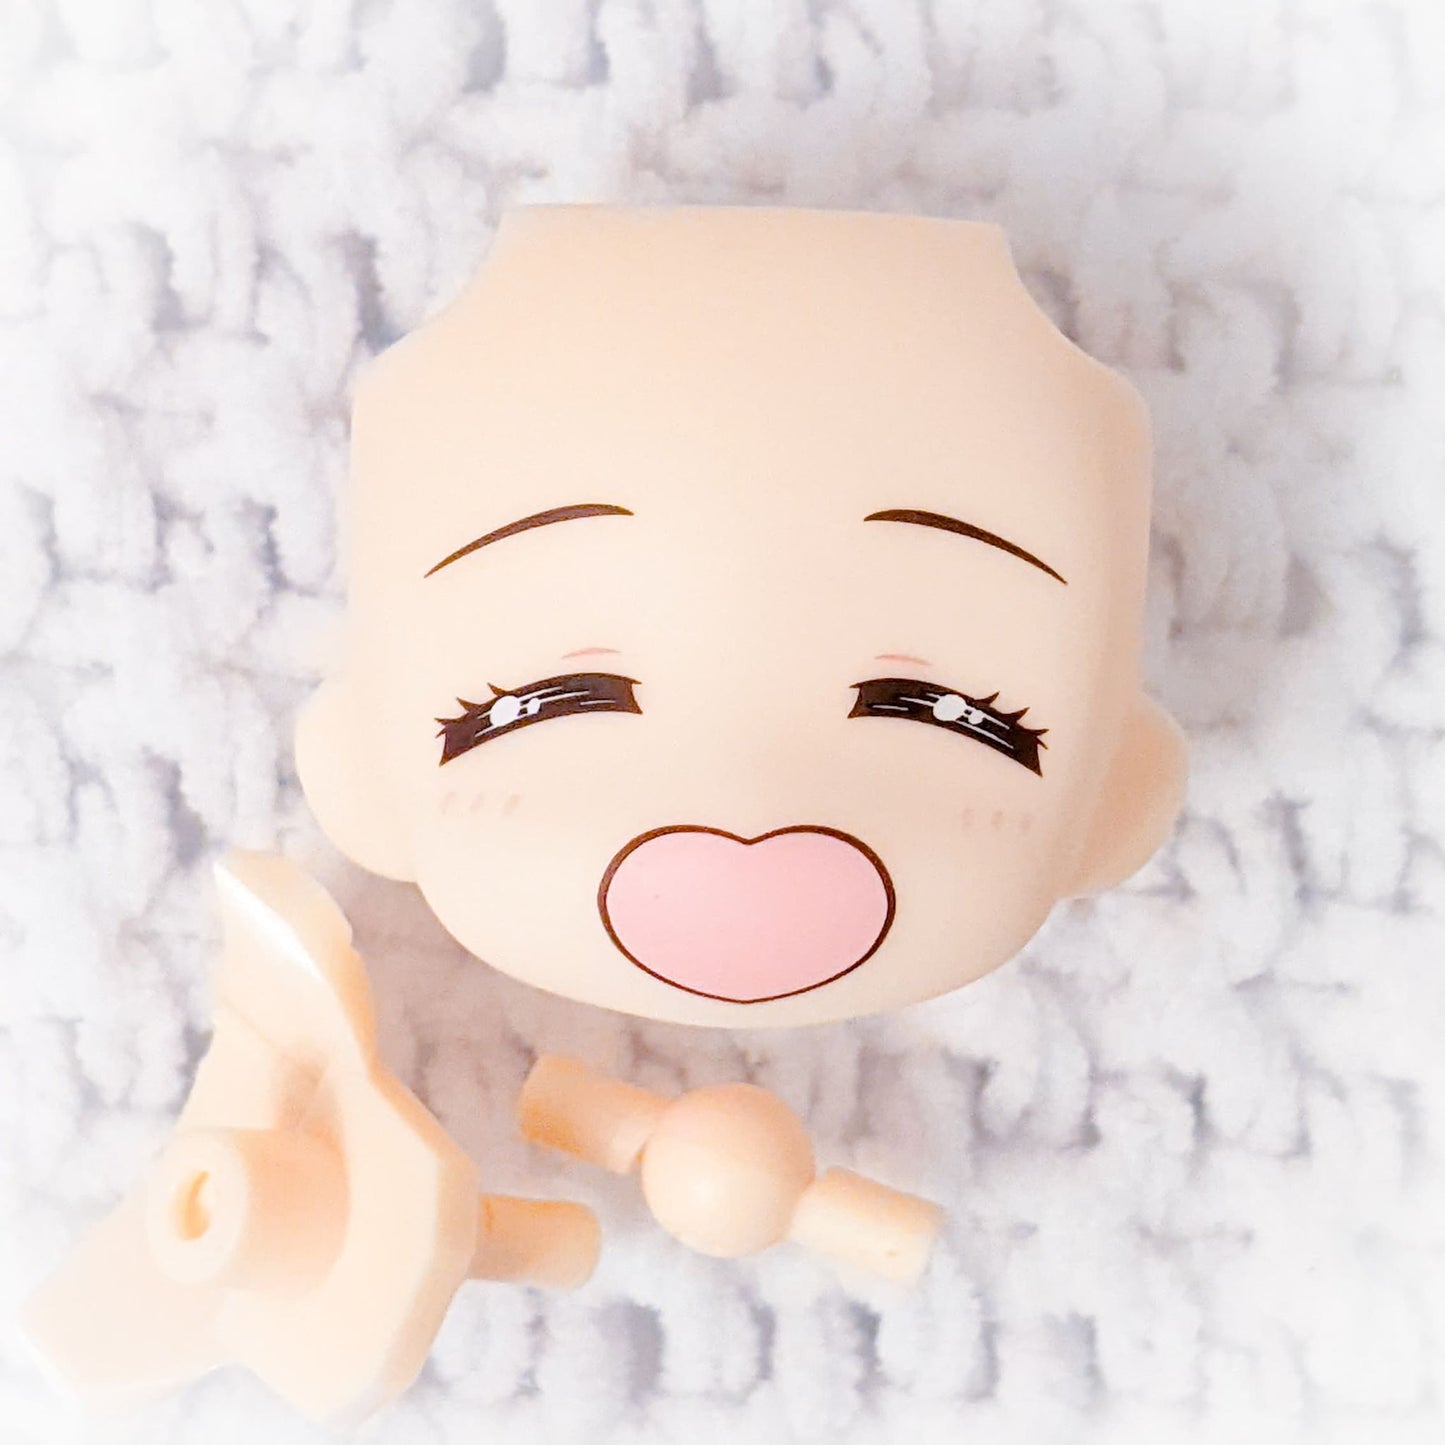 Nendoroid More Face Plate Swap Figure Piece - Good Smile Company